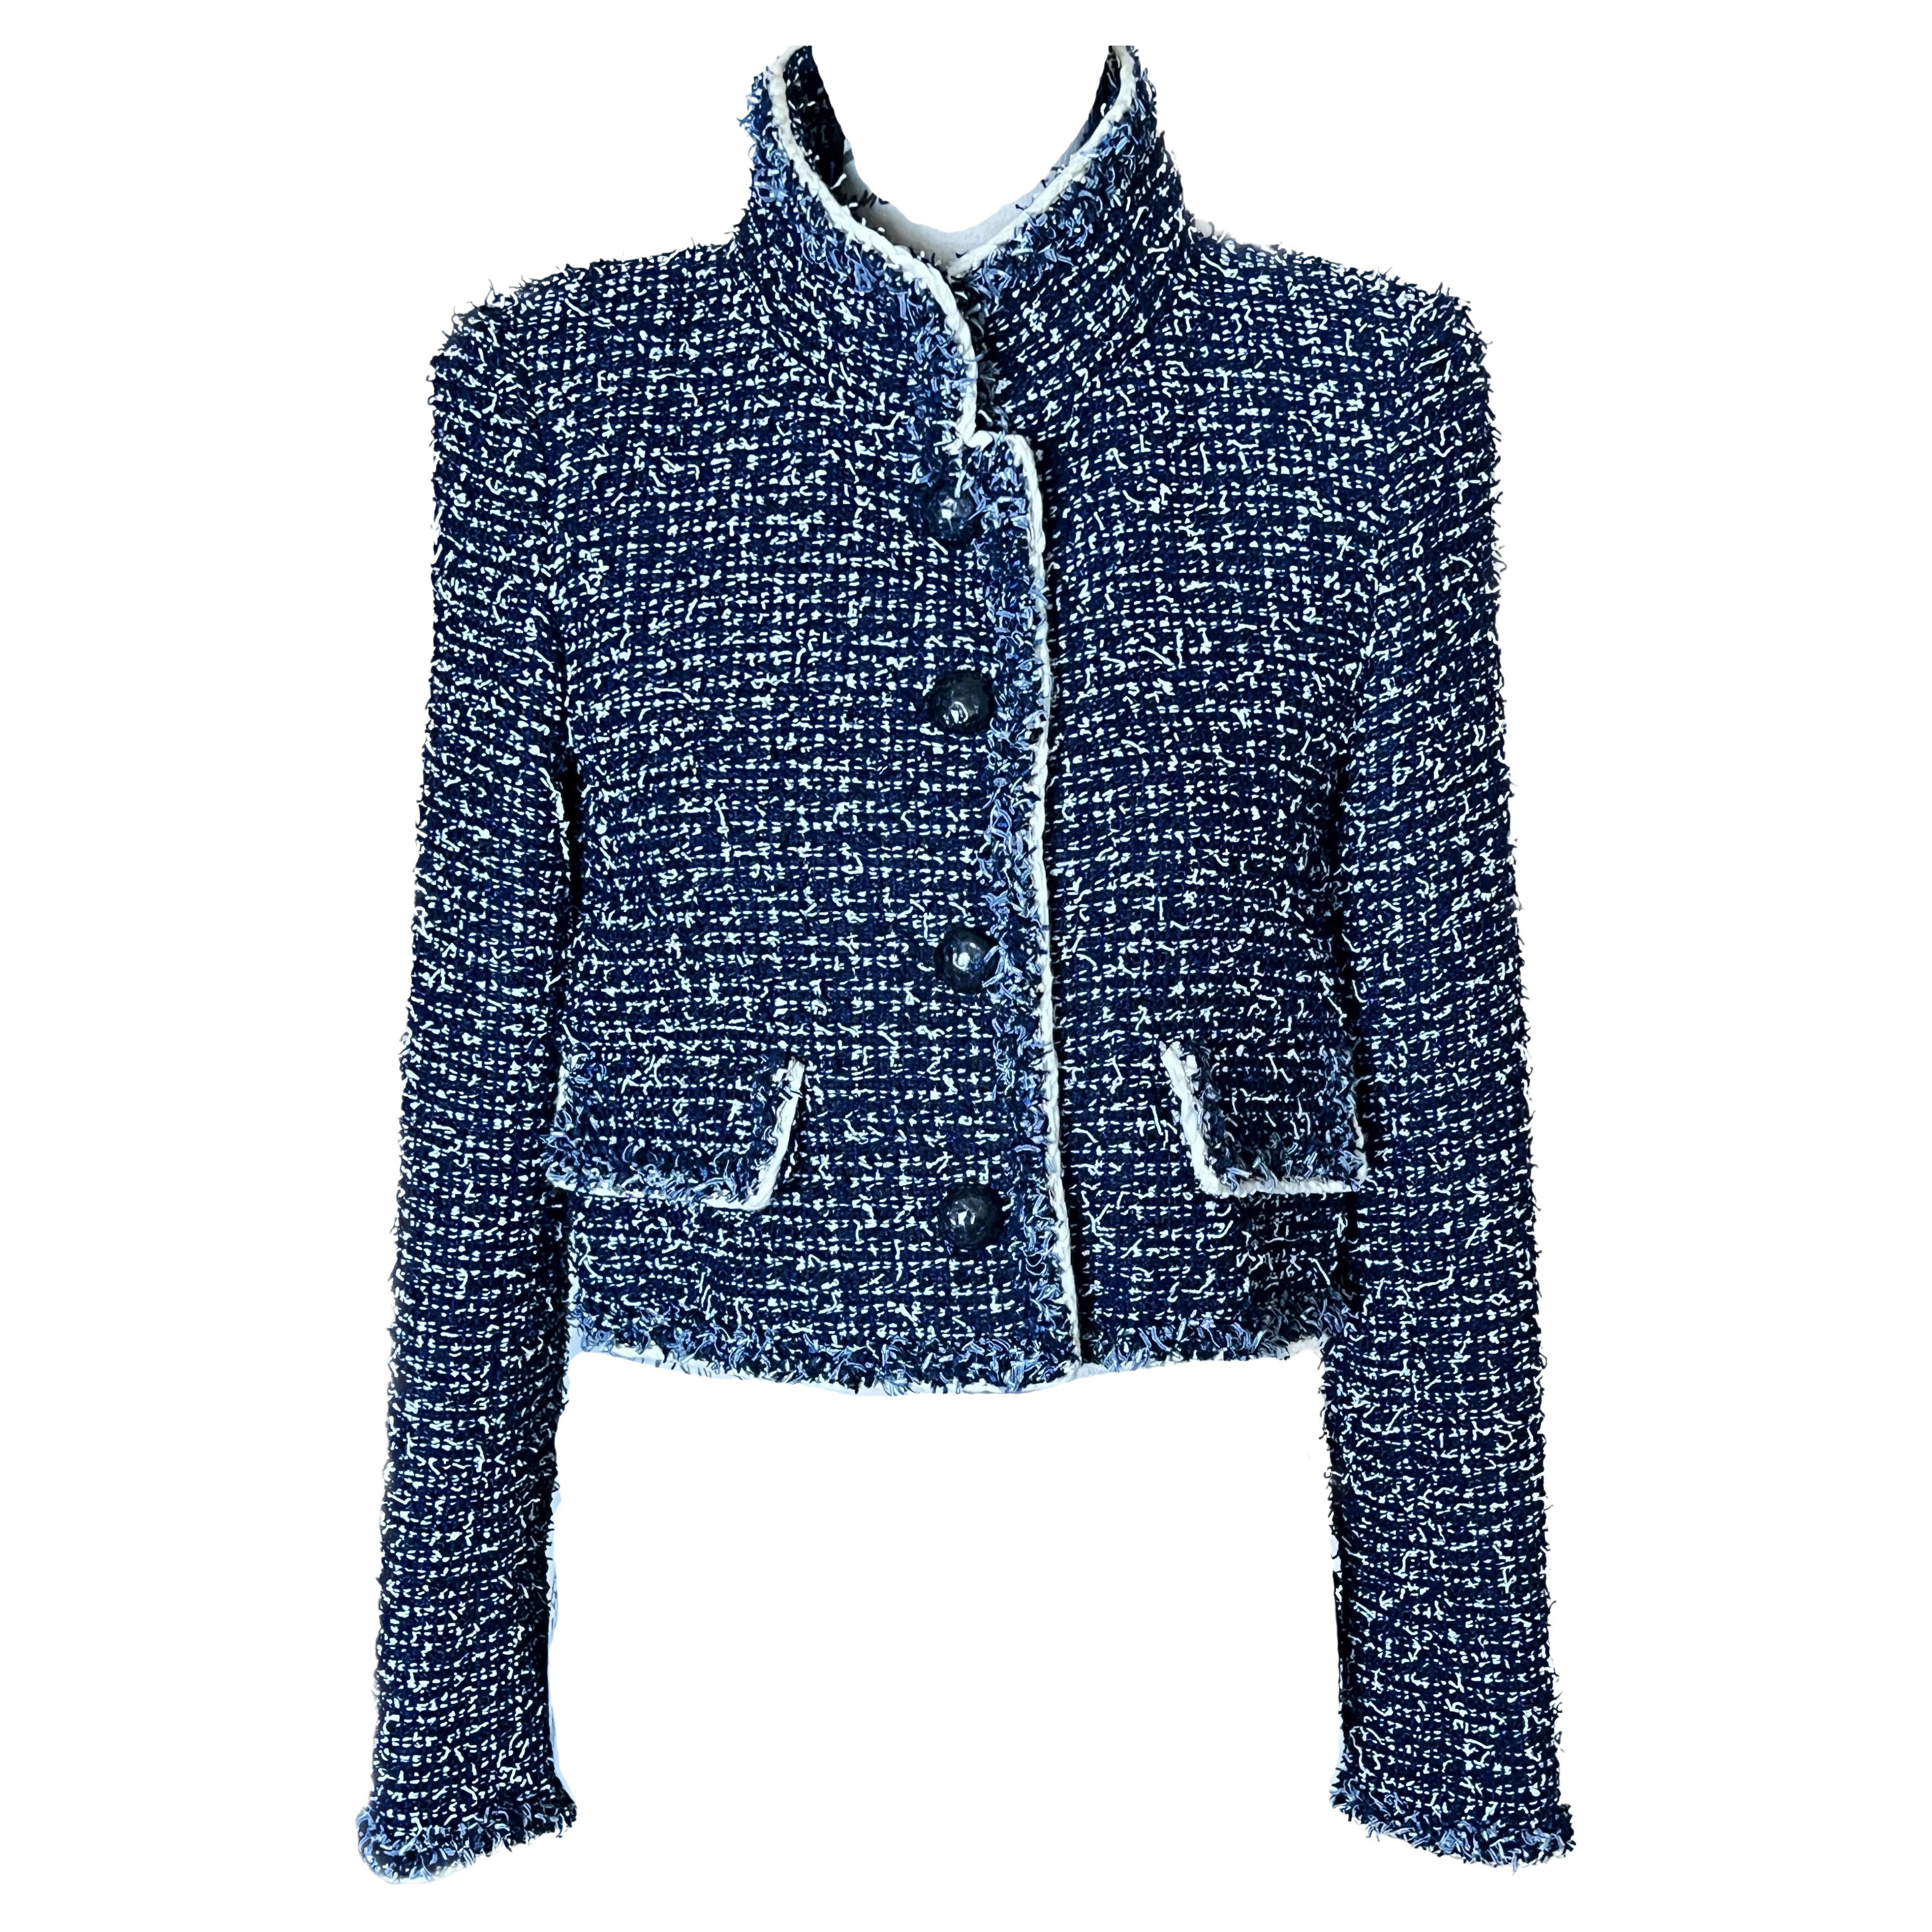 Chanel Chiara Ferragni Style CC Buttons Tweed Jacket